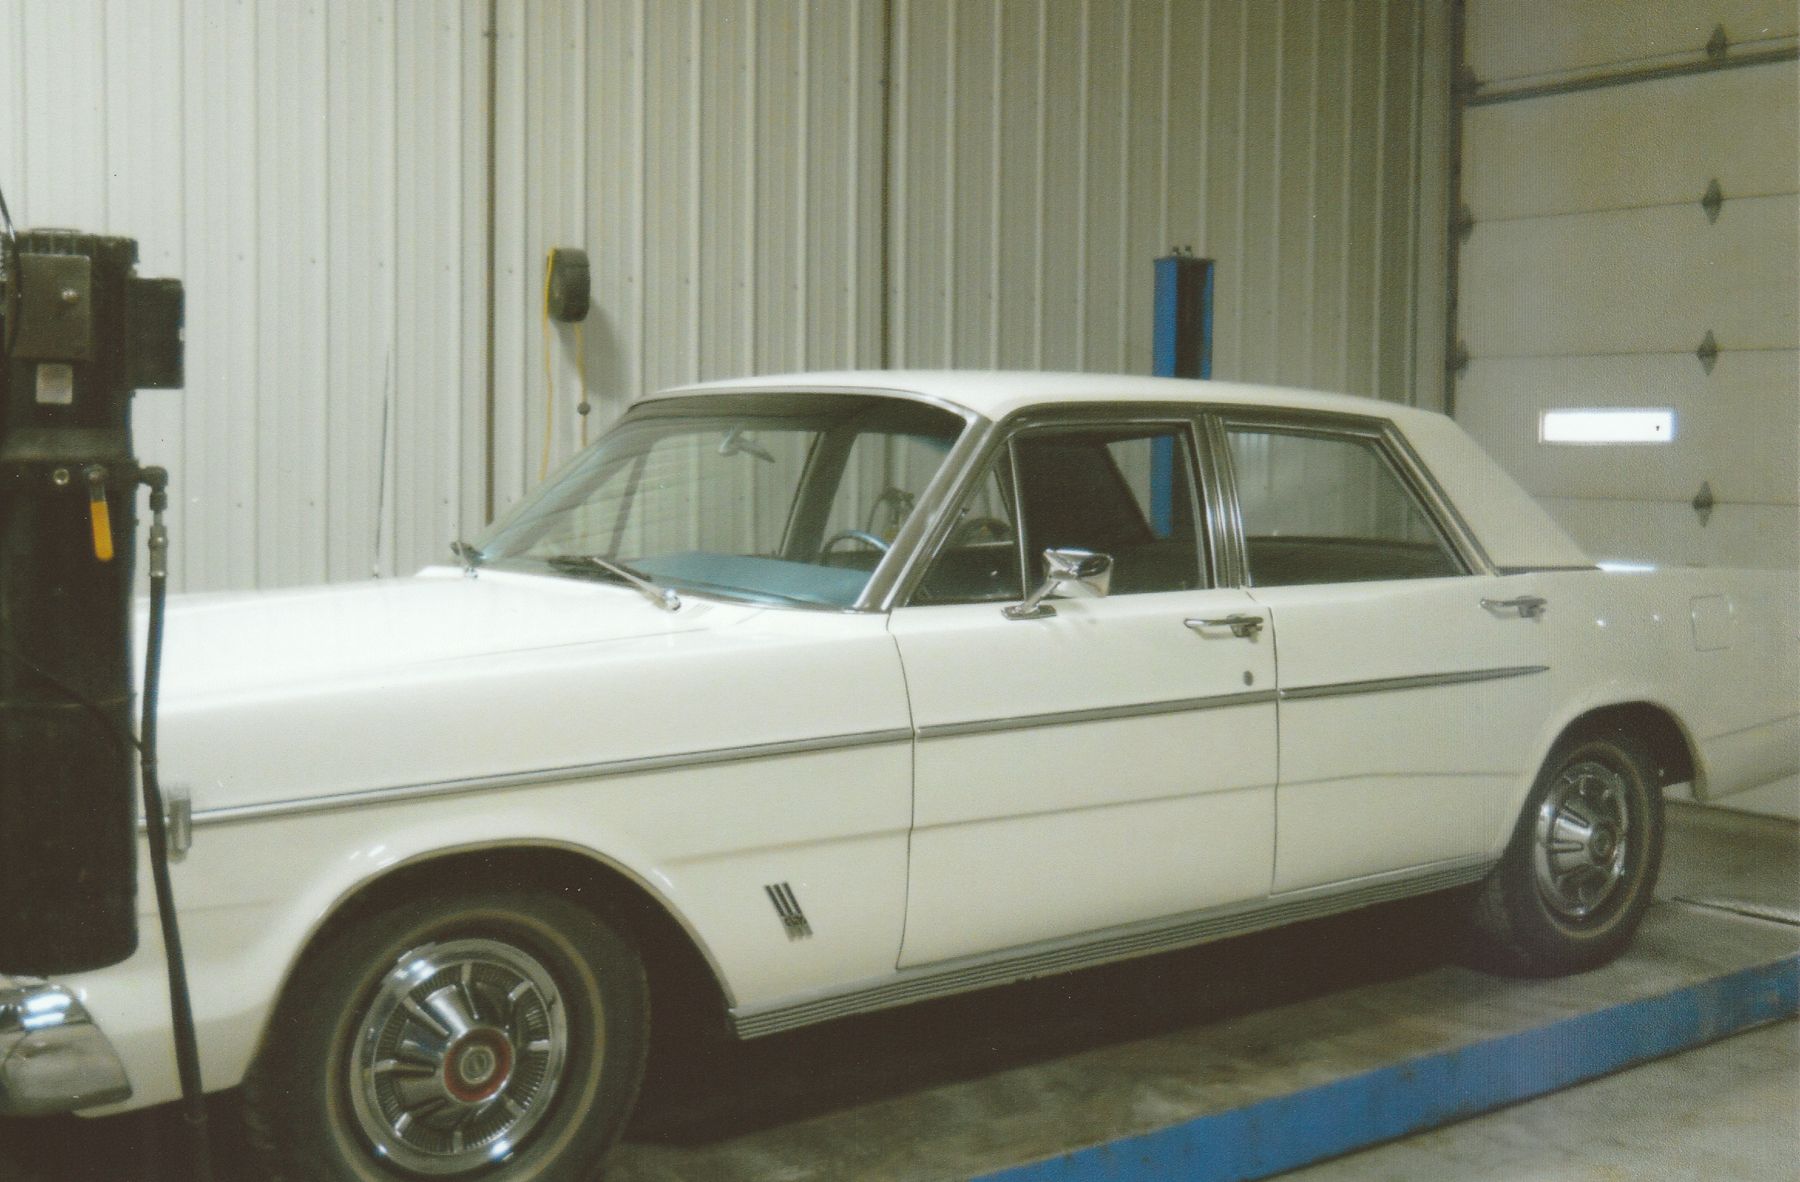 1966 Ford Galaxie 500 full length in garage